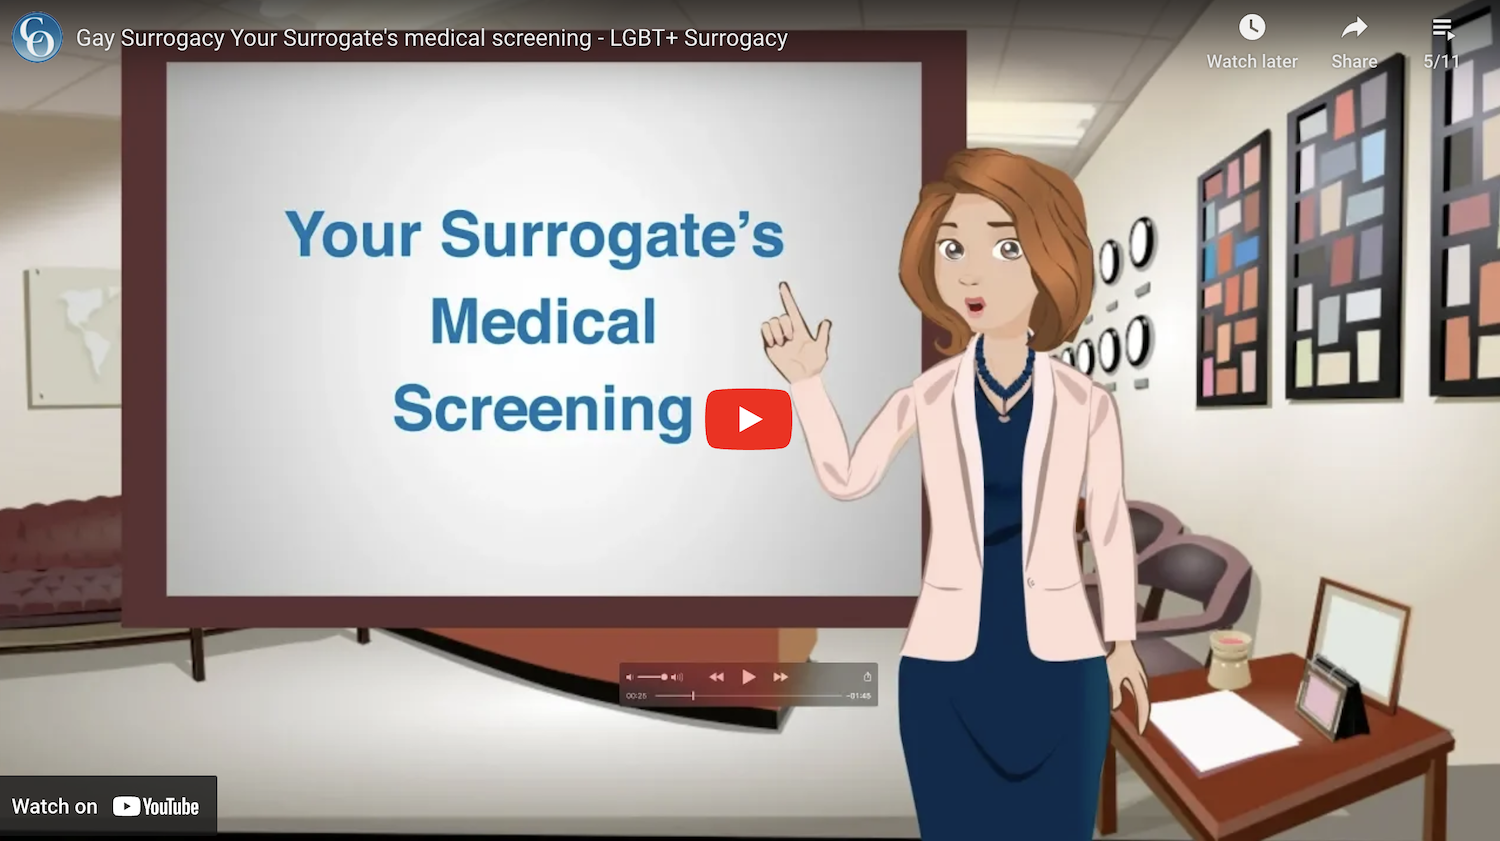 Surrogate's medical screening video